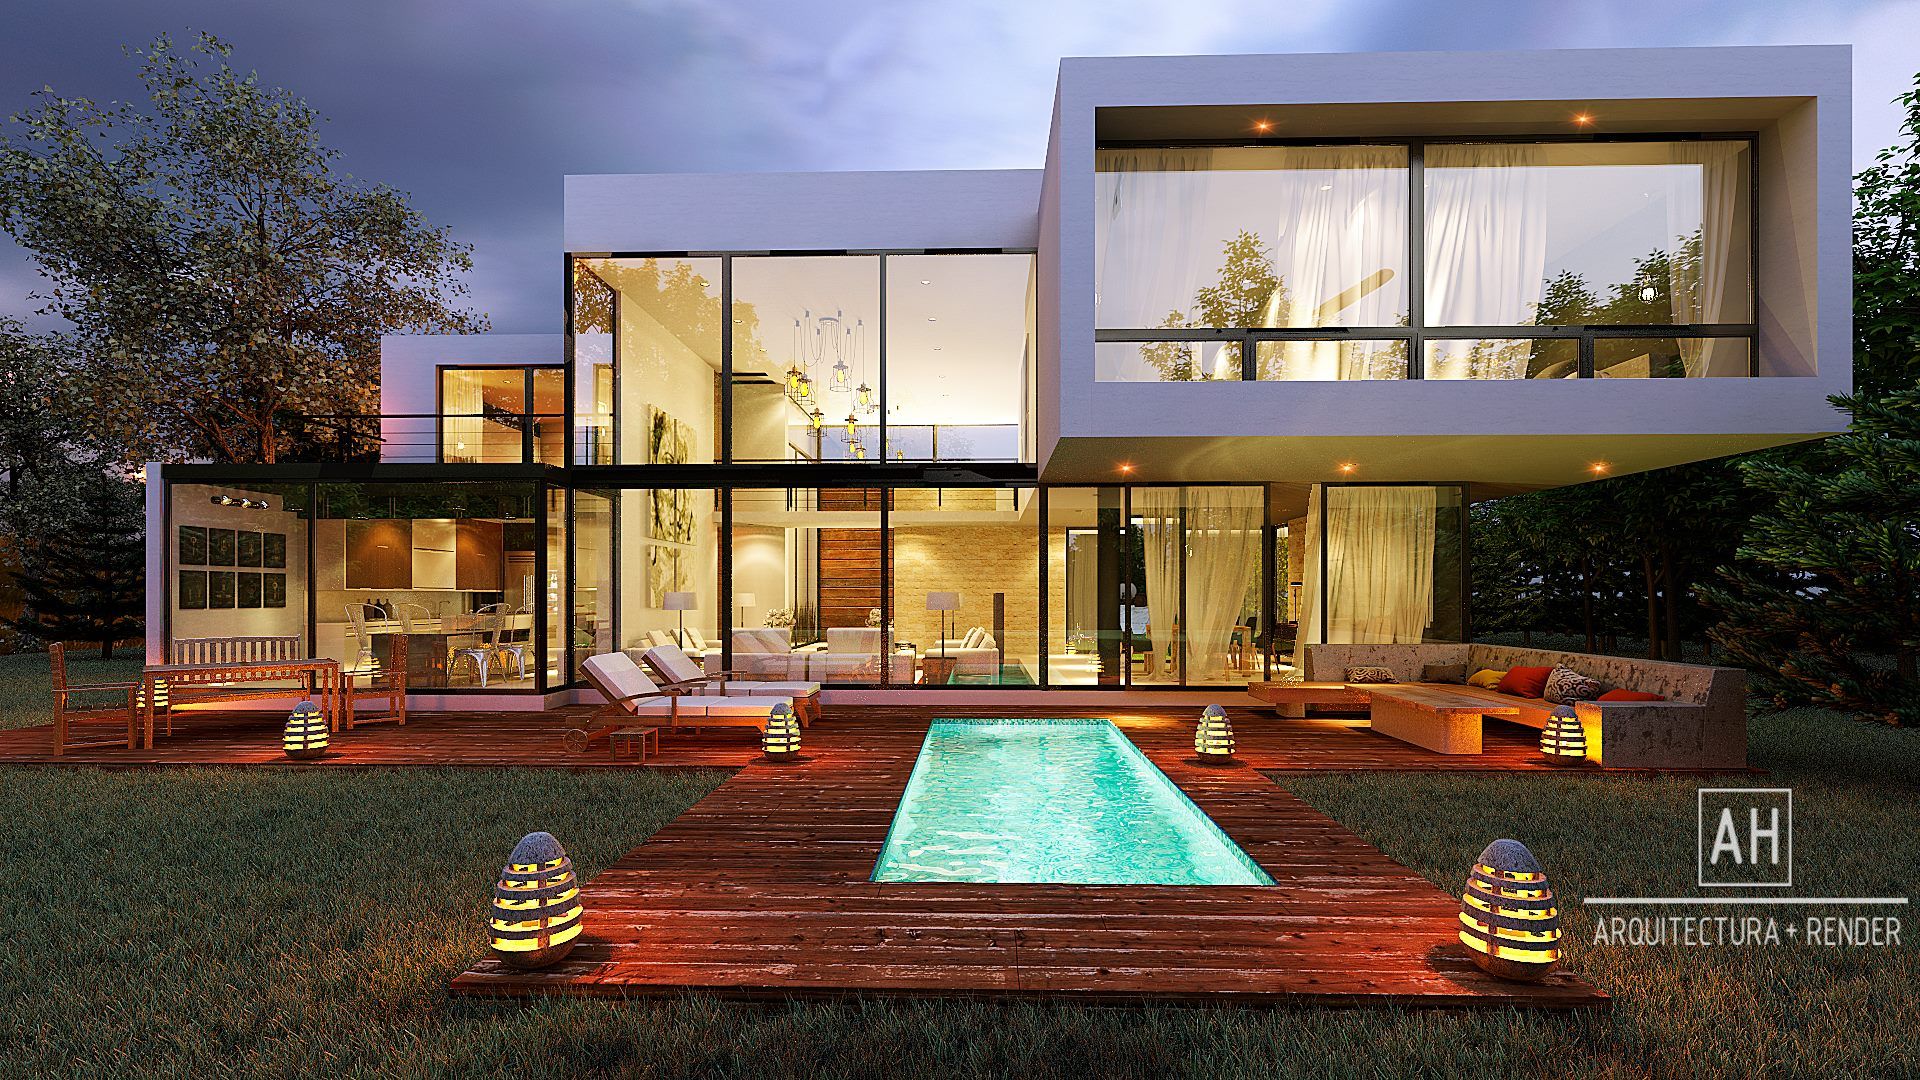 RESIDENCIA EN LEON, GTO., ah arquitectura + render ah arquitectura + render Single family home